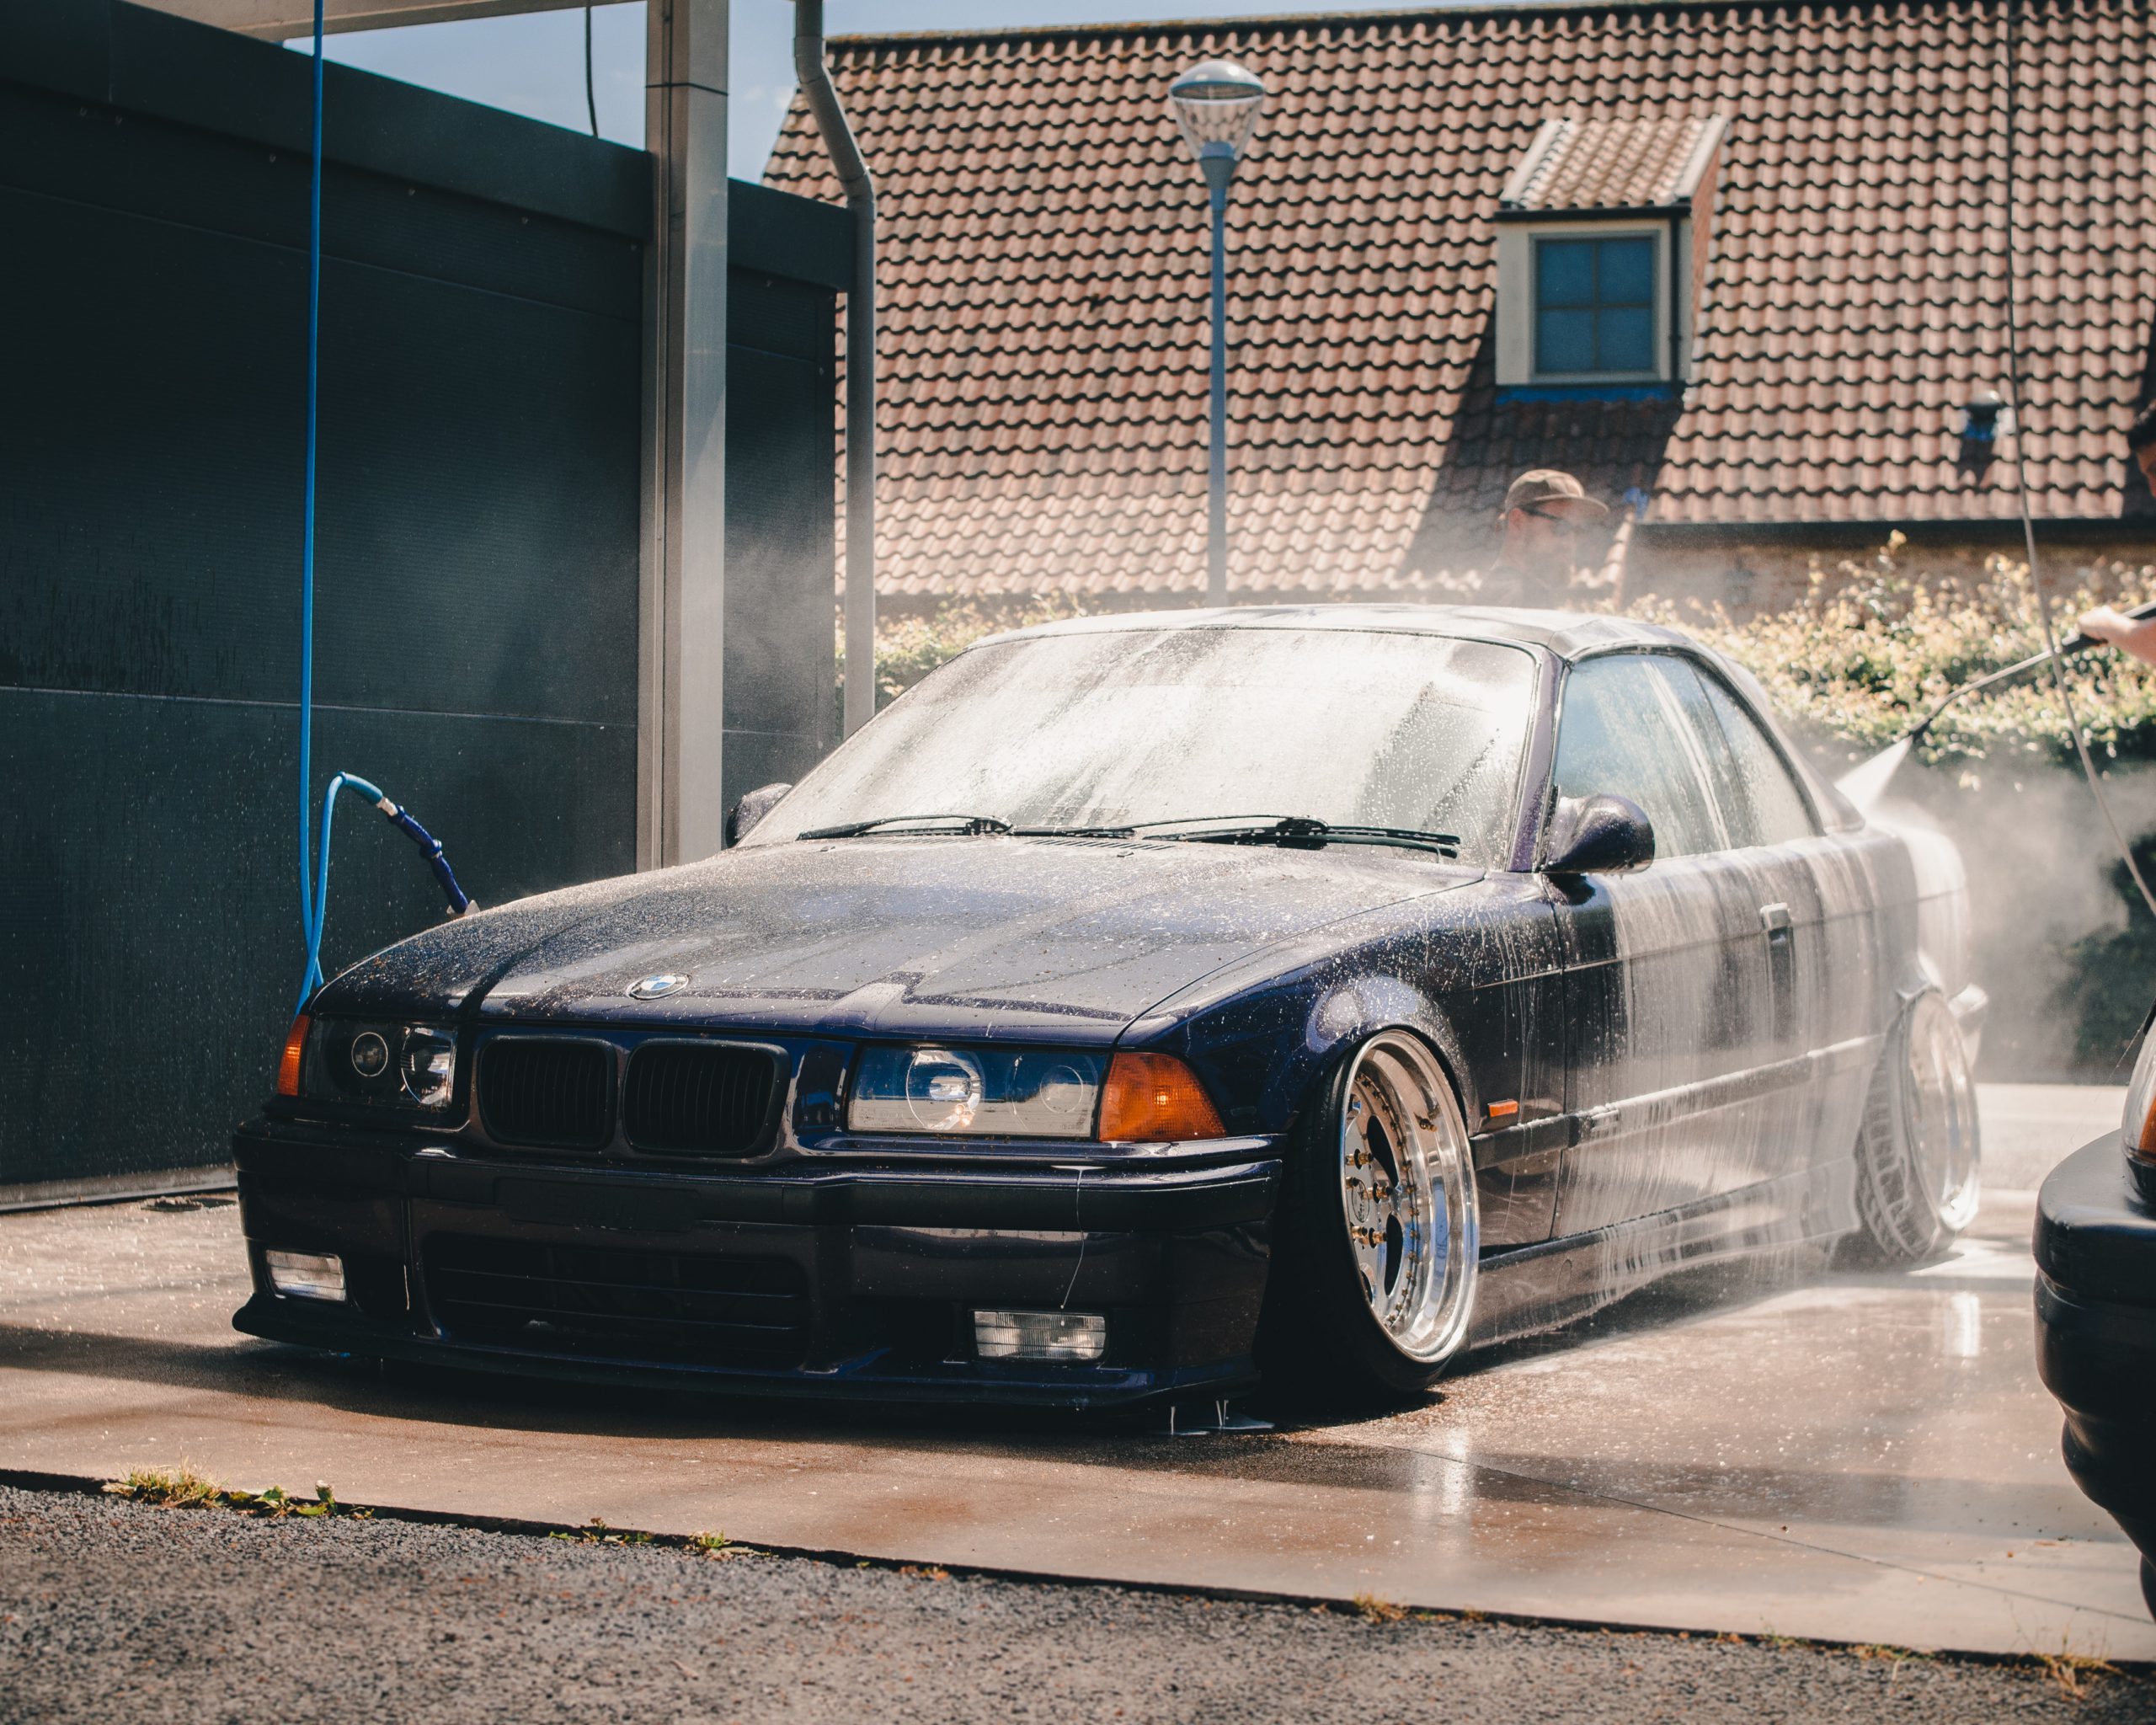 Black BMW being car washed